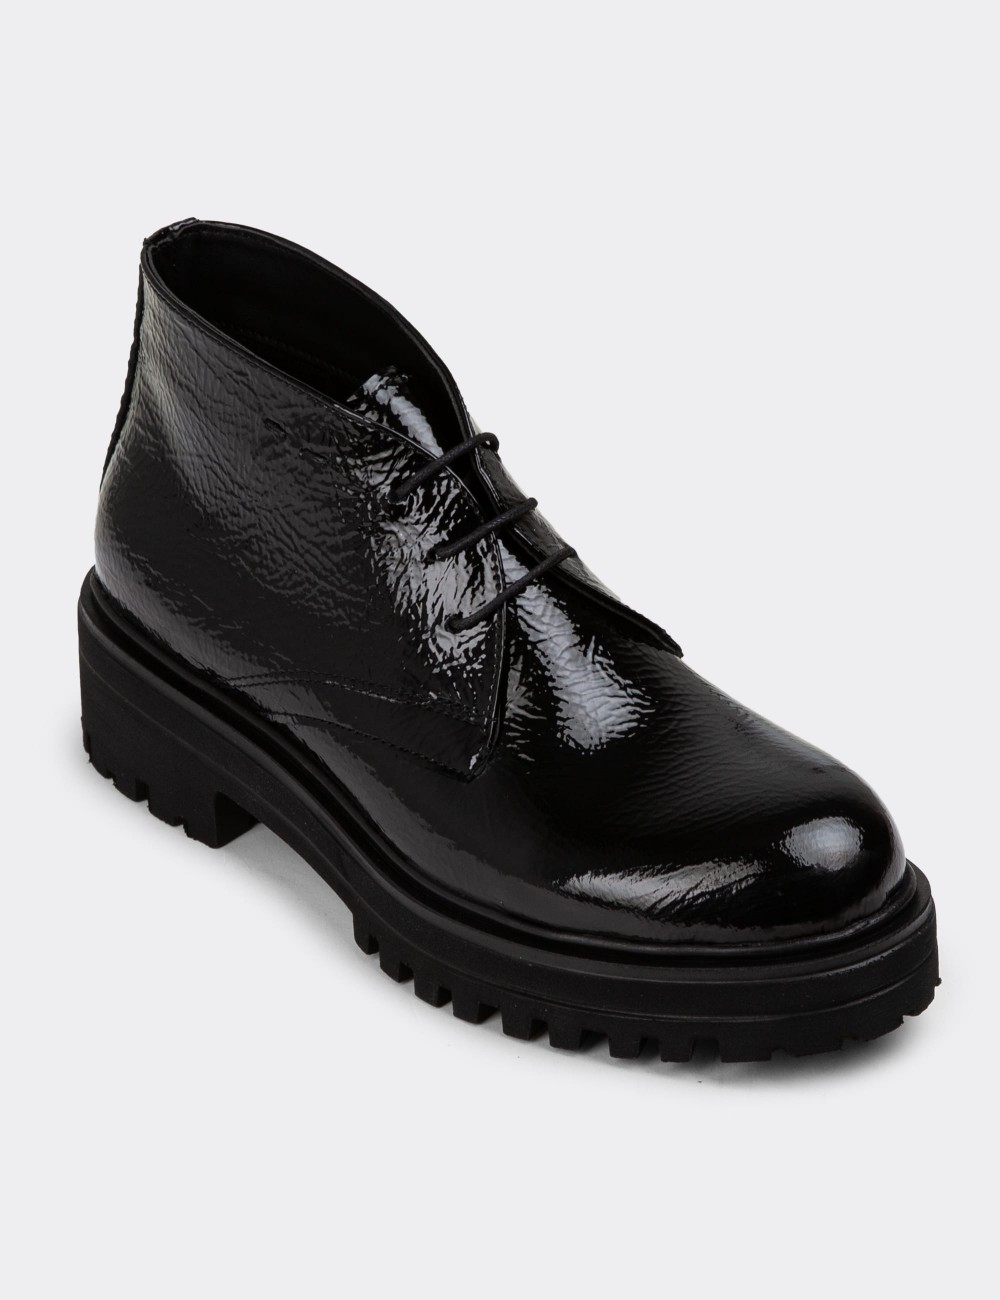 Black Patent Leather Desert Boots - 01847ZSYHE03